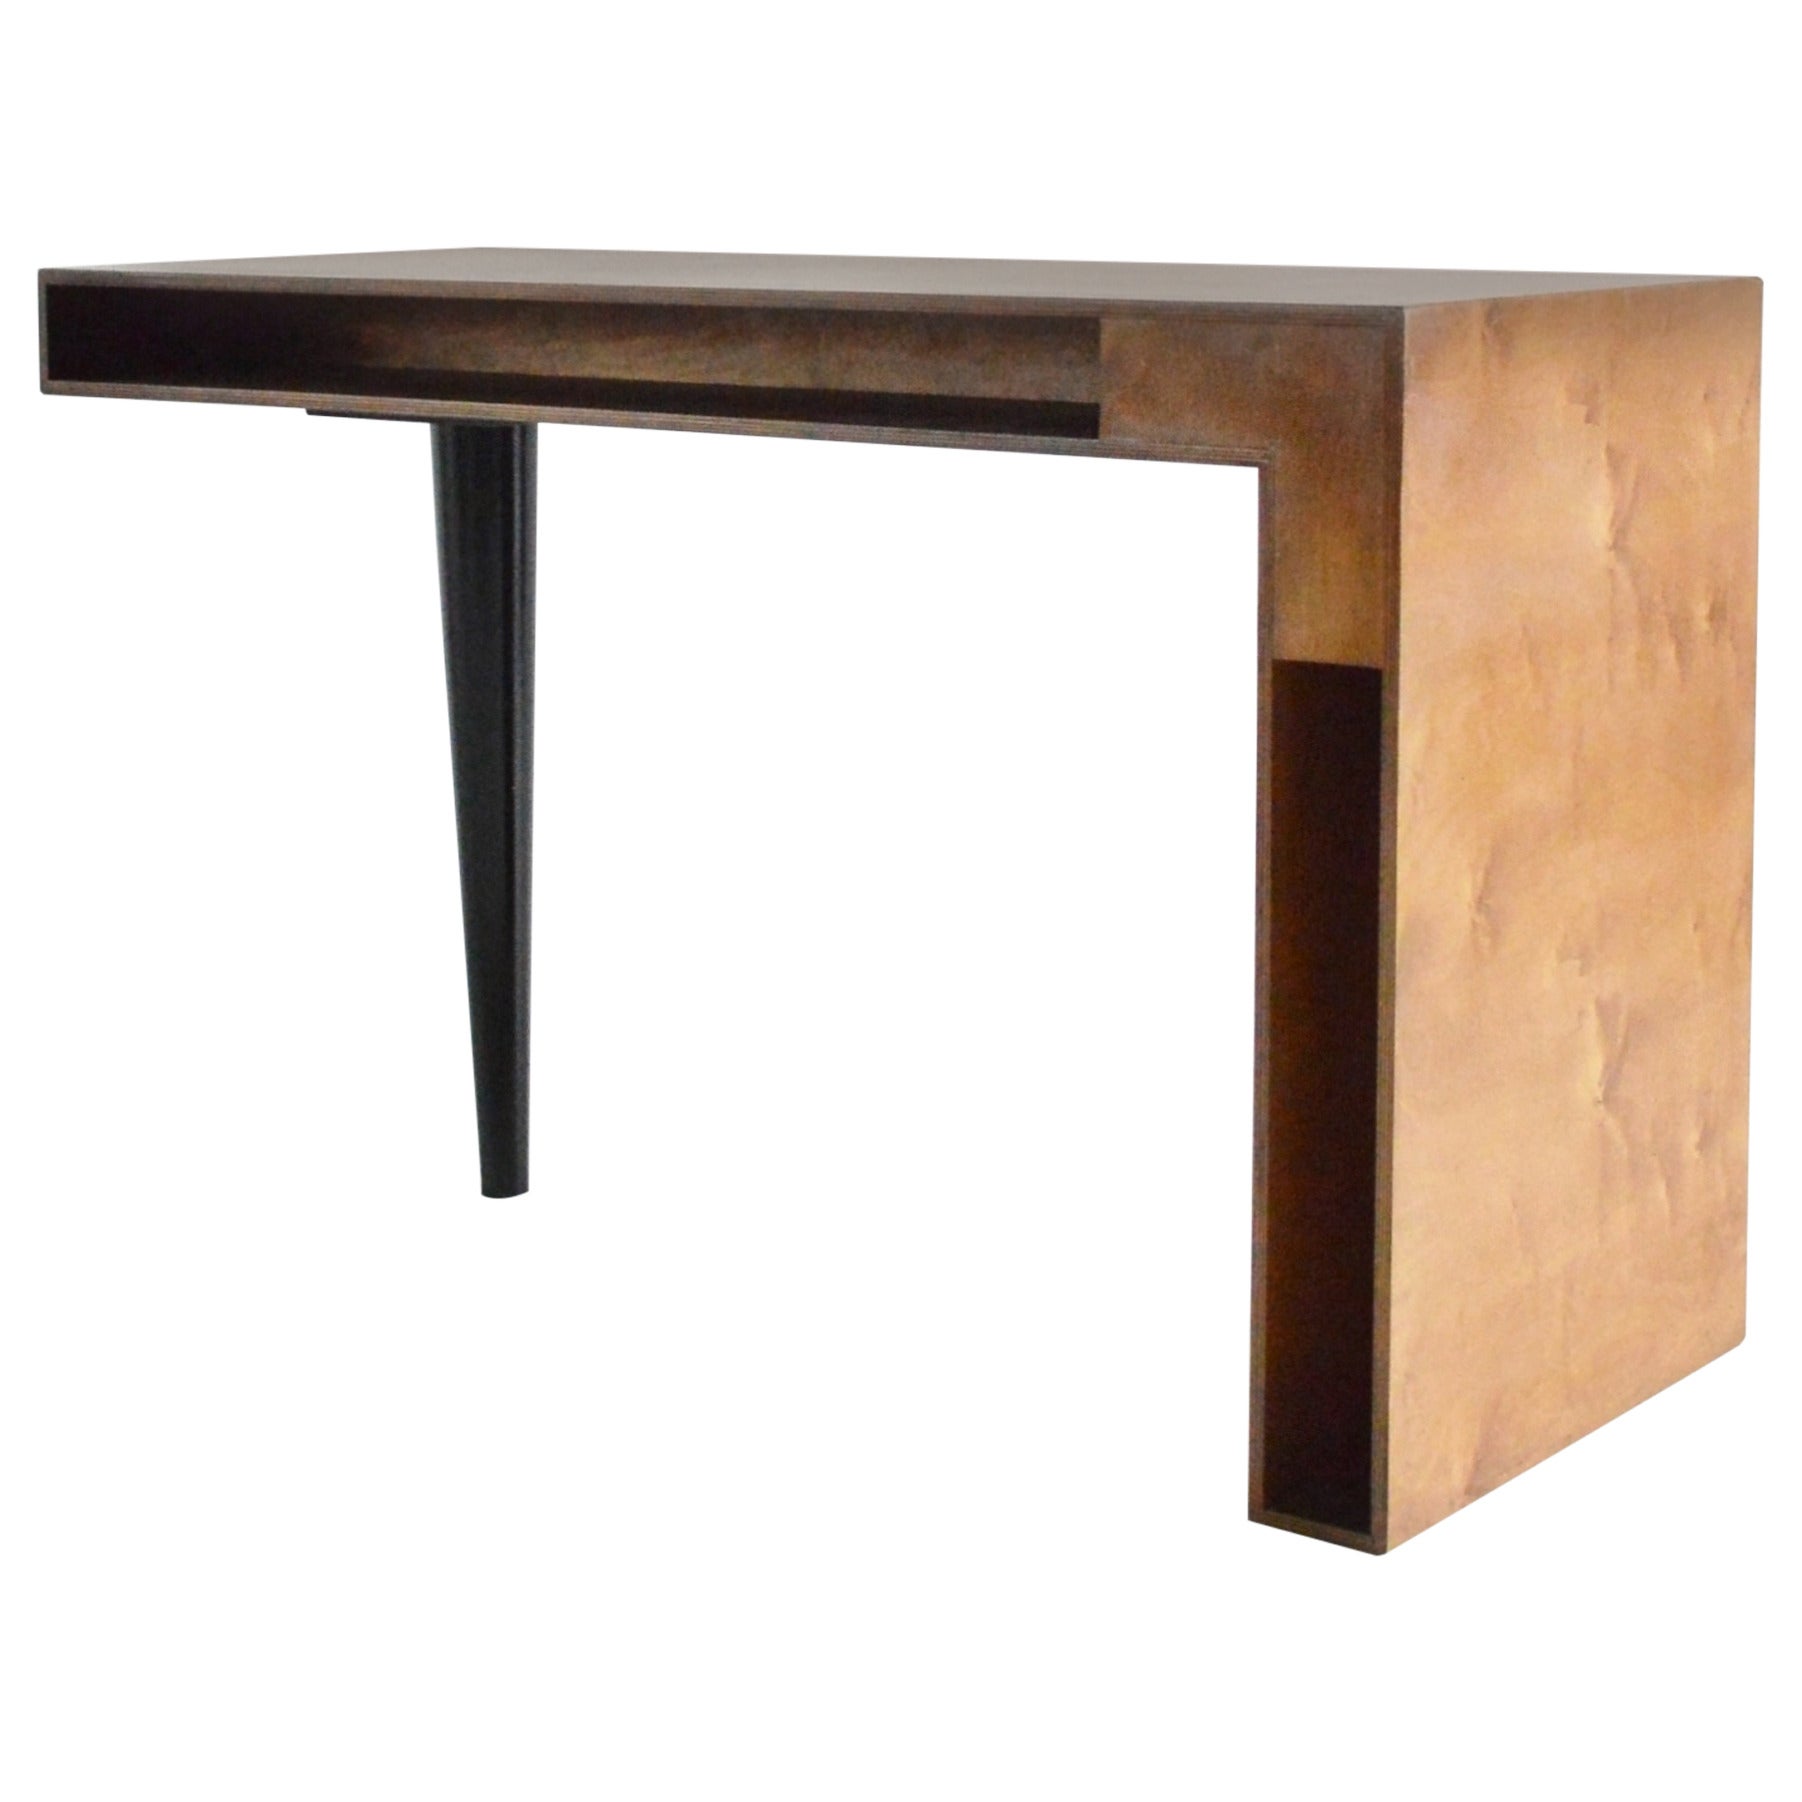 Artist Designed Prototype Desk or Console Table